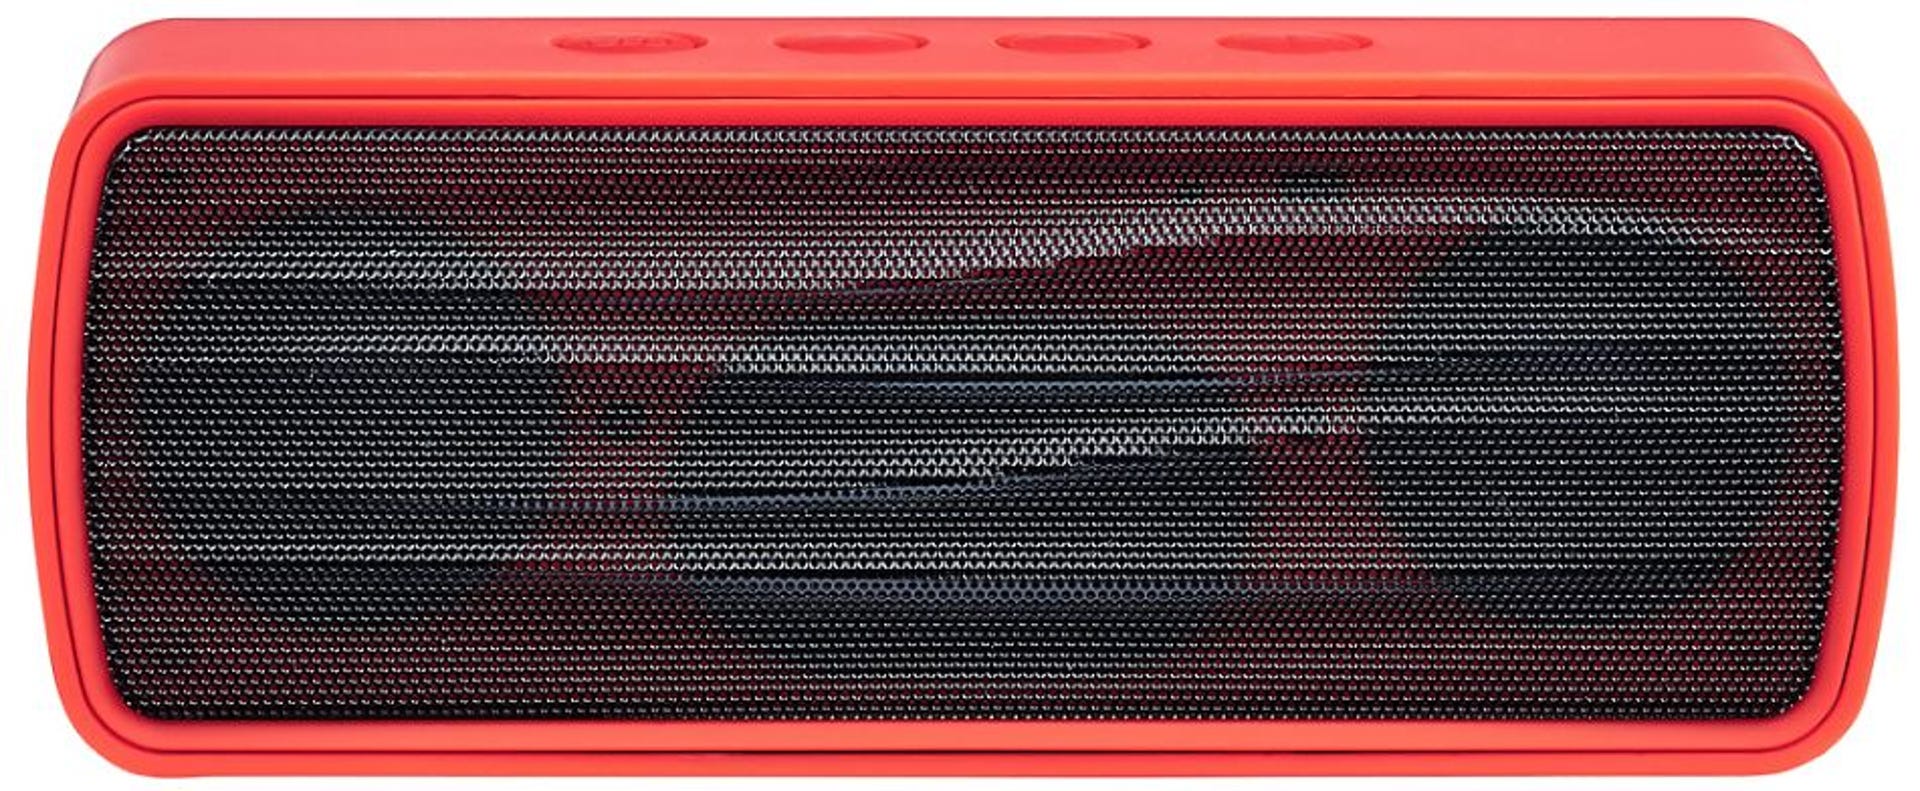 insignia-portable-bluetooth-speaker-red-black.jpg